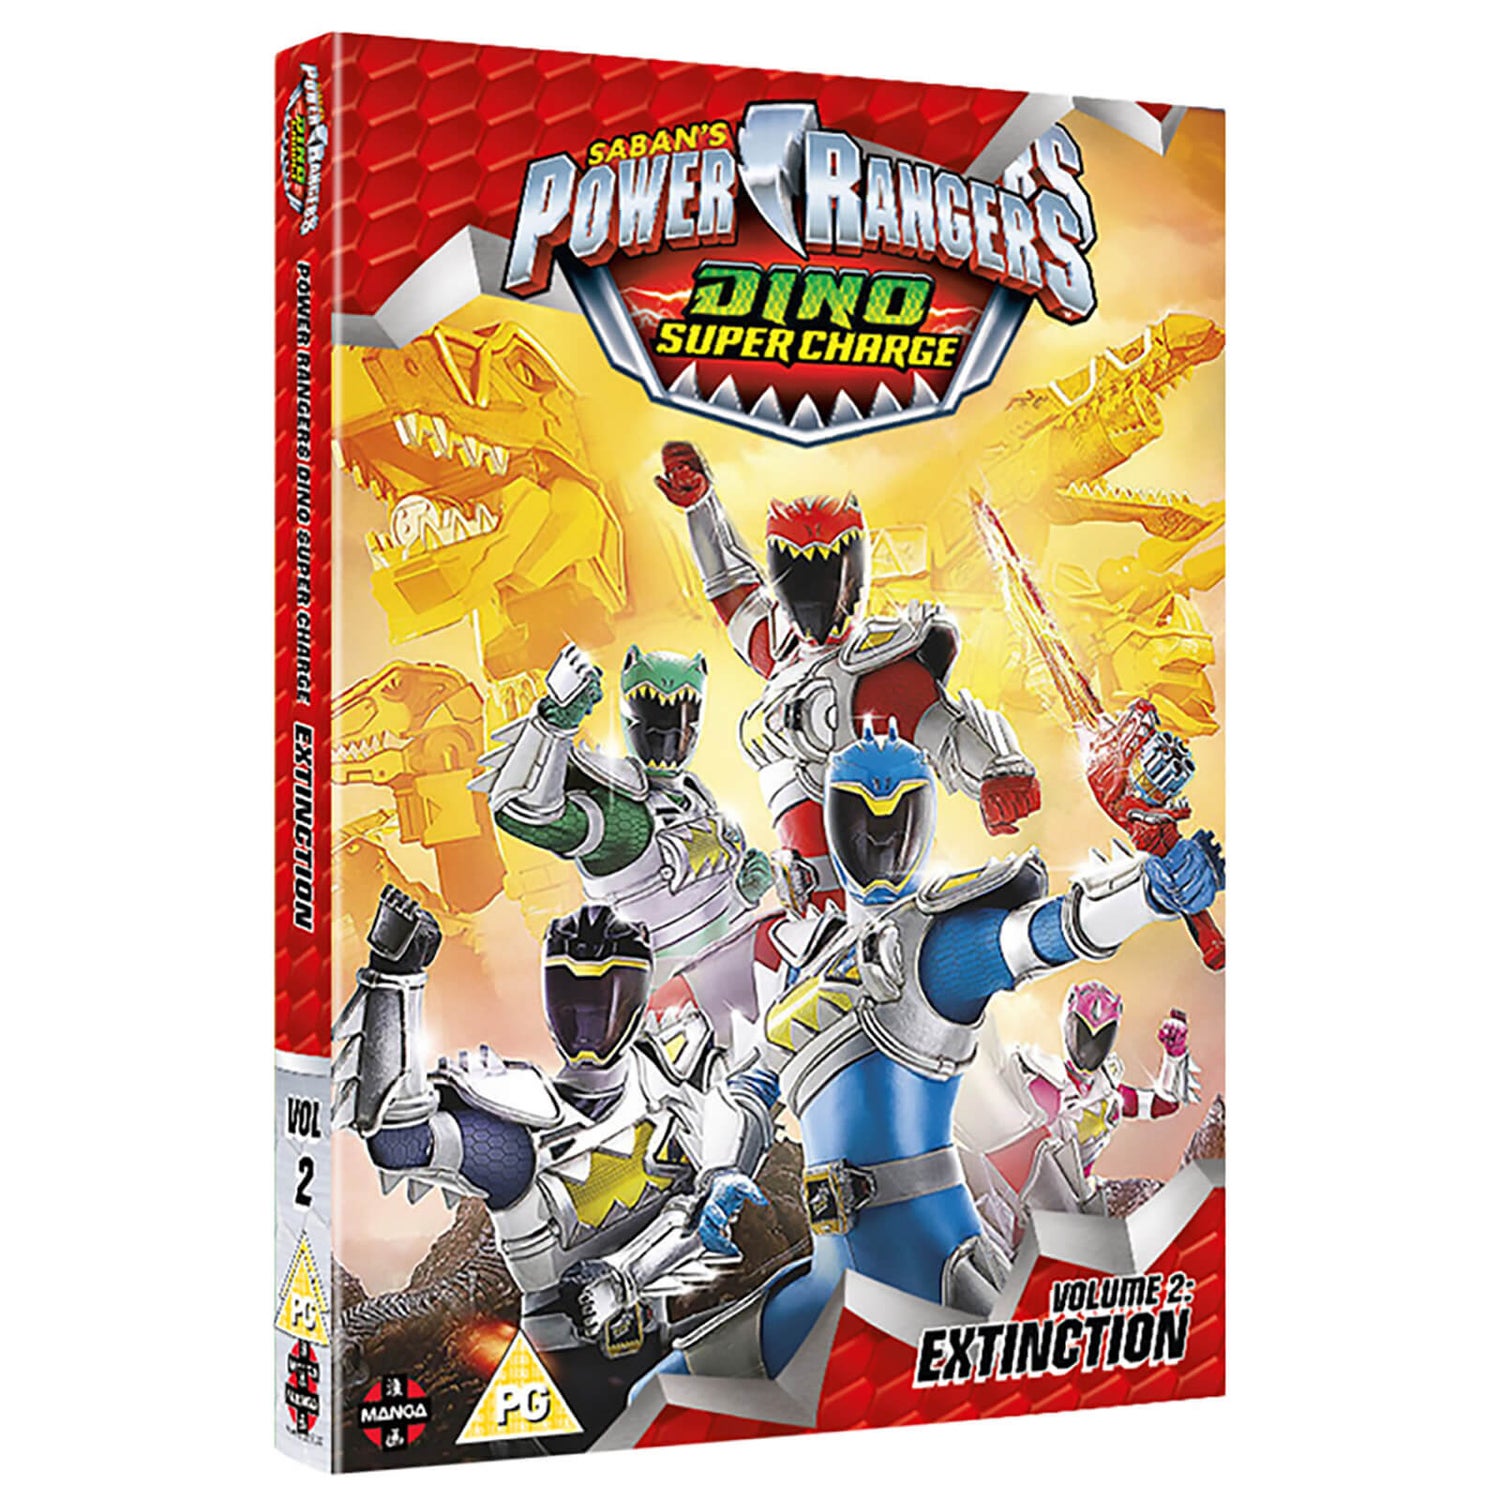 Power Rangers Dino Super Charge: Vol 2 - Extinction (afleveringen 11-20)